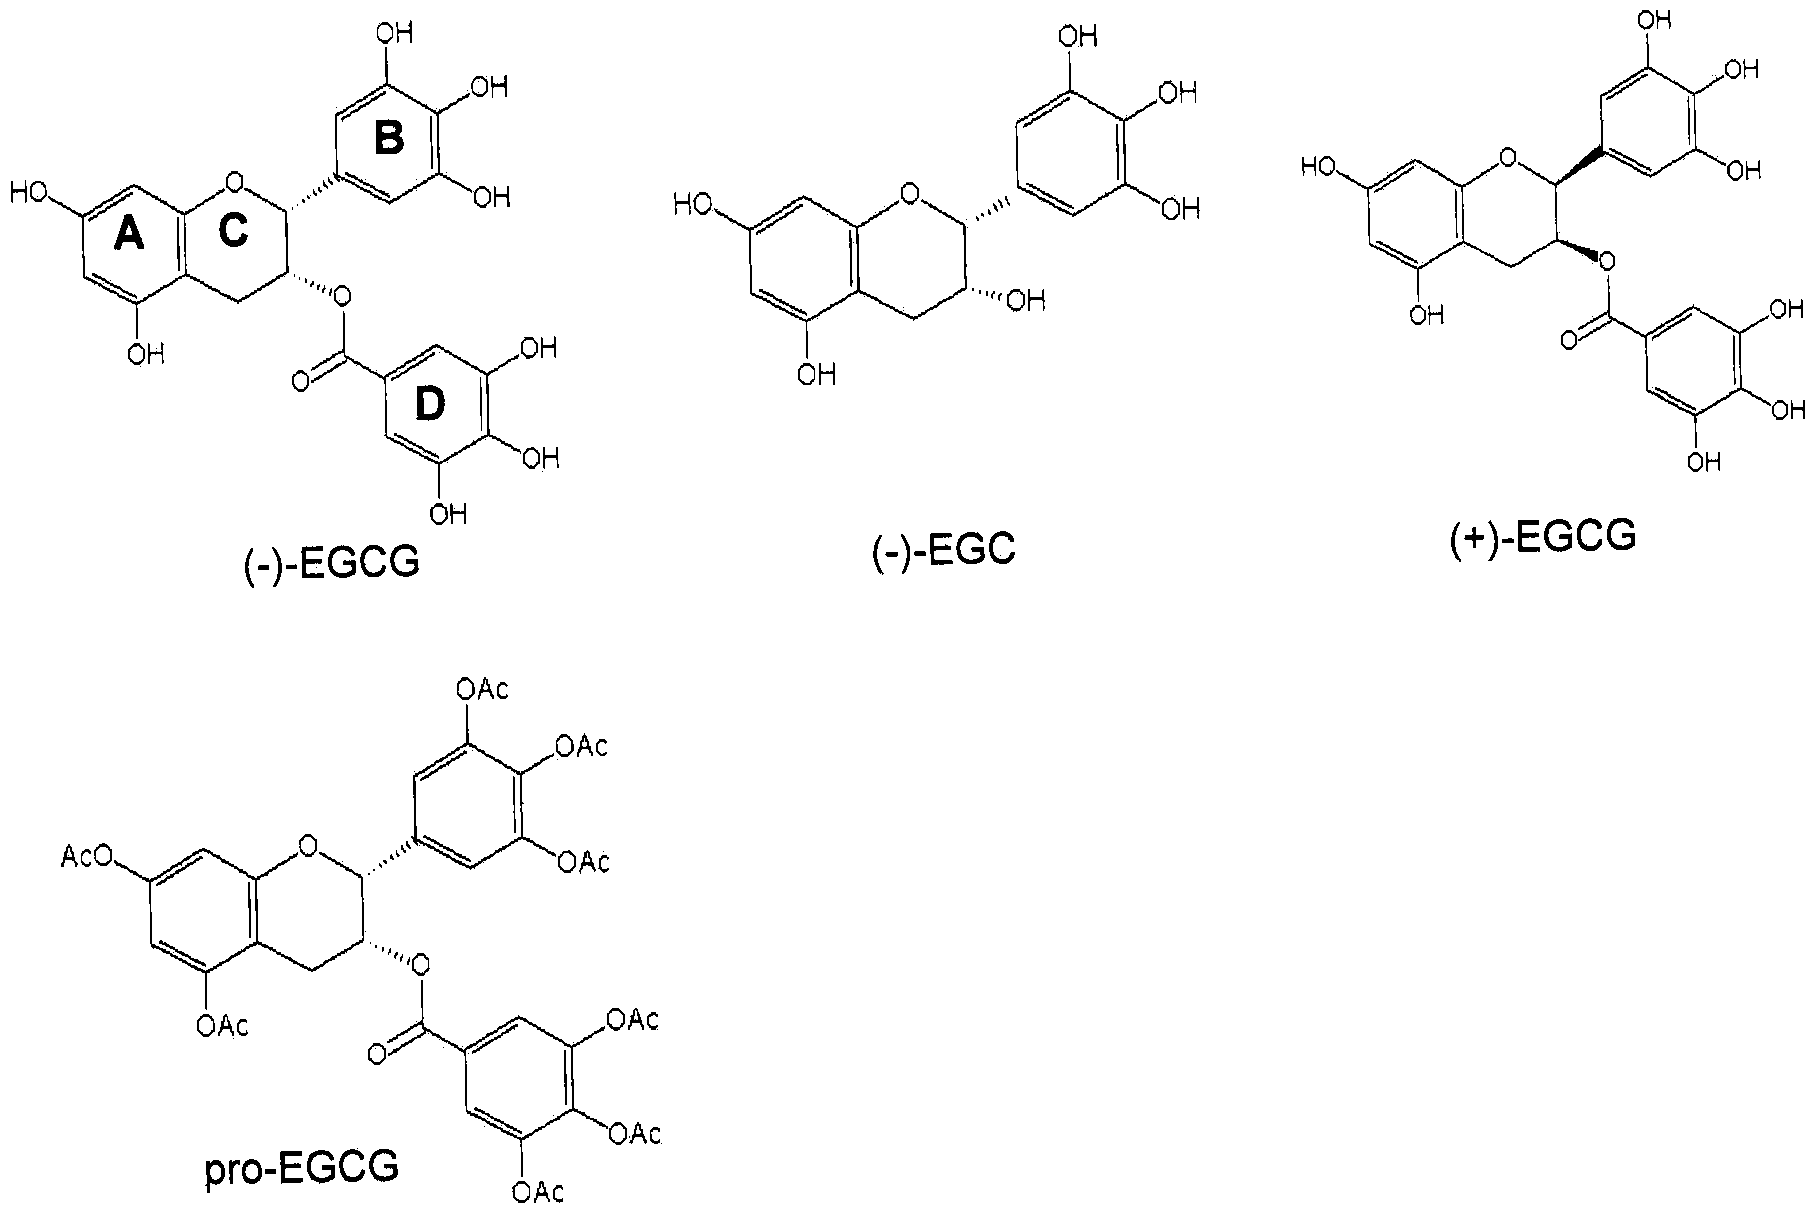 Synthetic epigallocatechin gallafe (EGGG) analogs